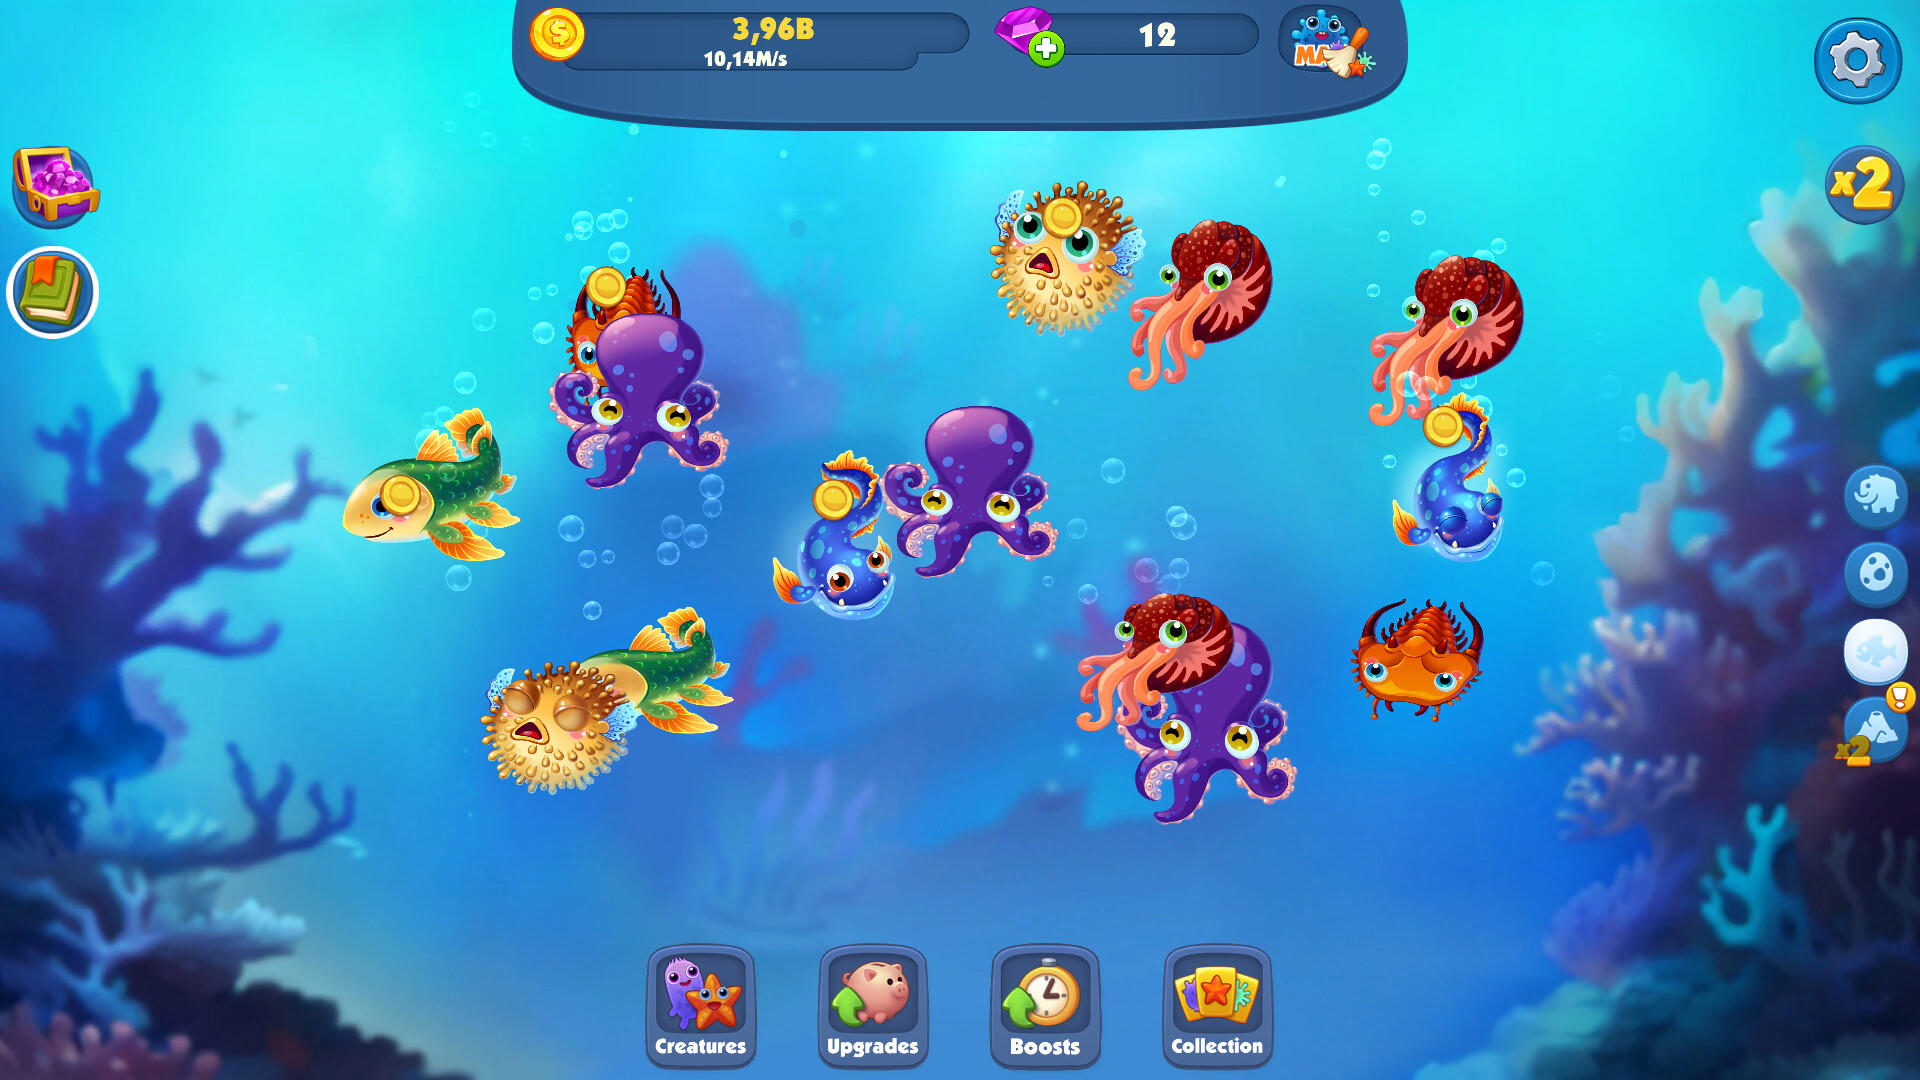 Game of Evolution screenshot game